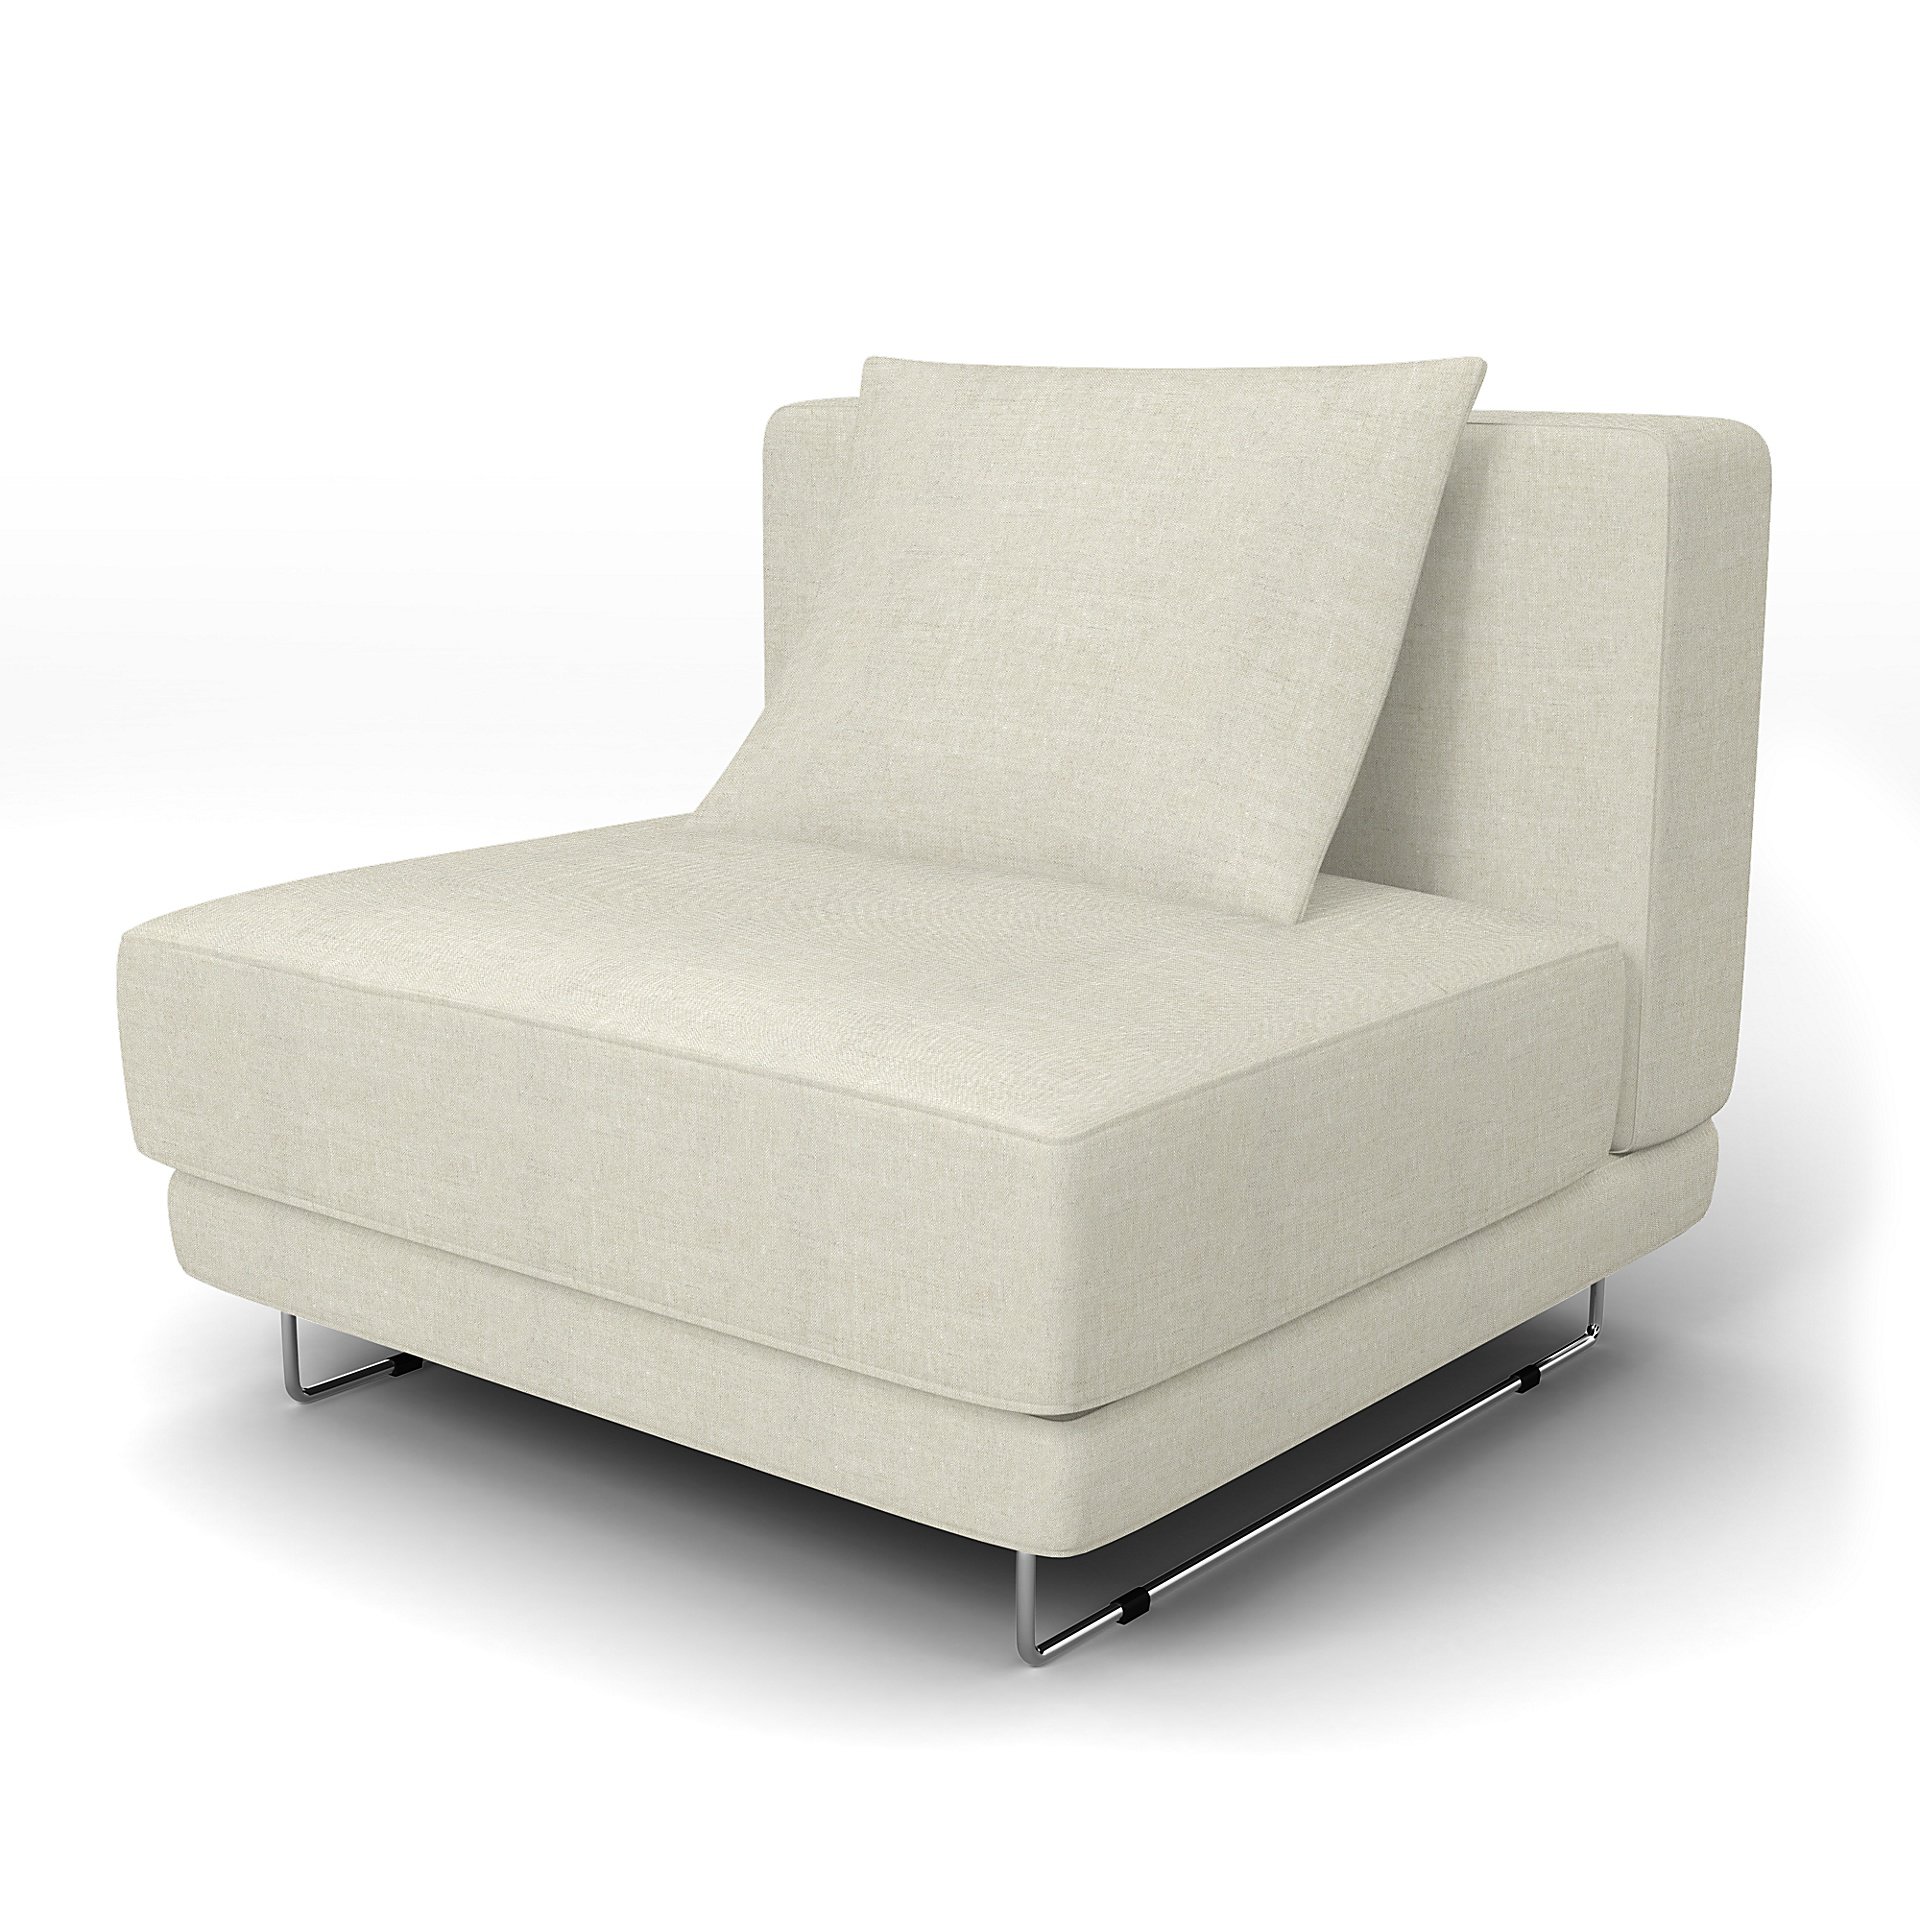 IKEA - Tylosand 1 Seat Module Cover, Natural, Linen - Bemz